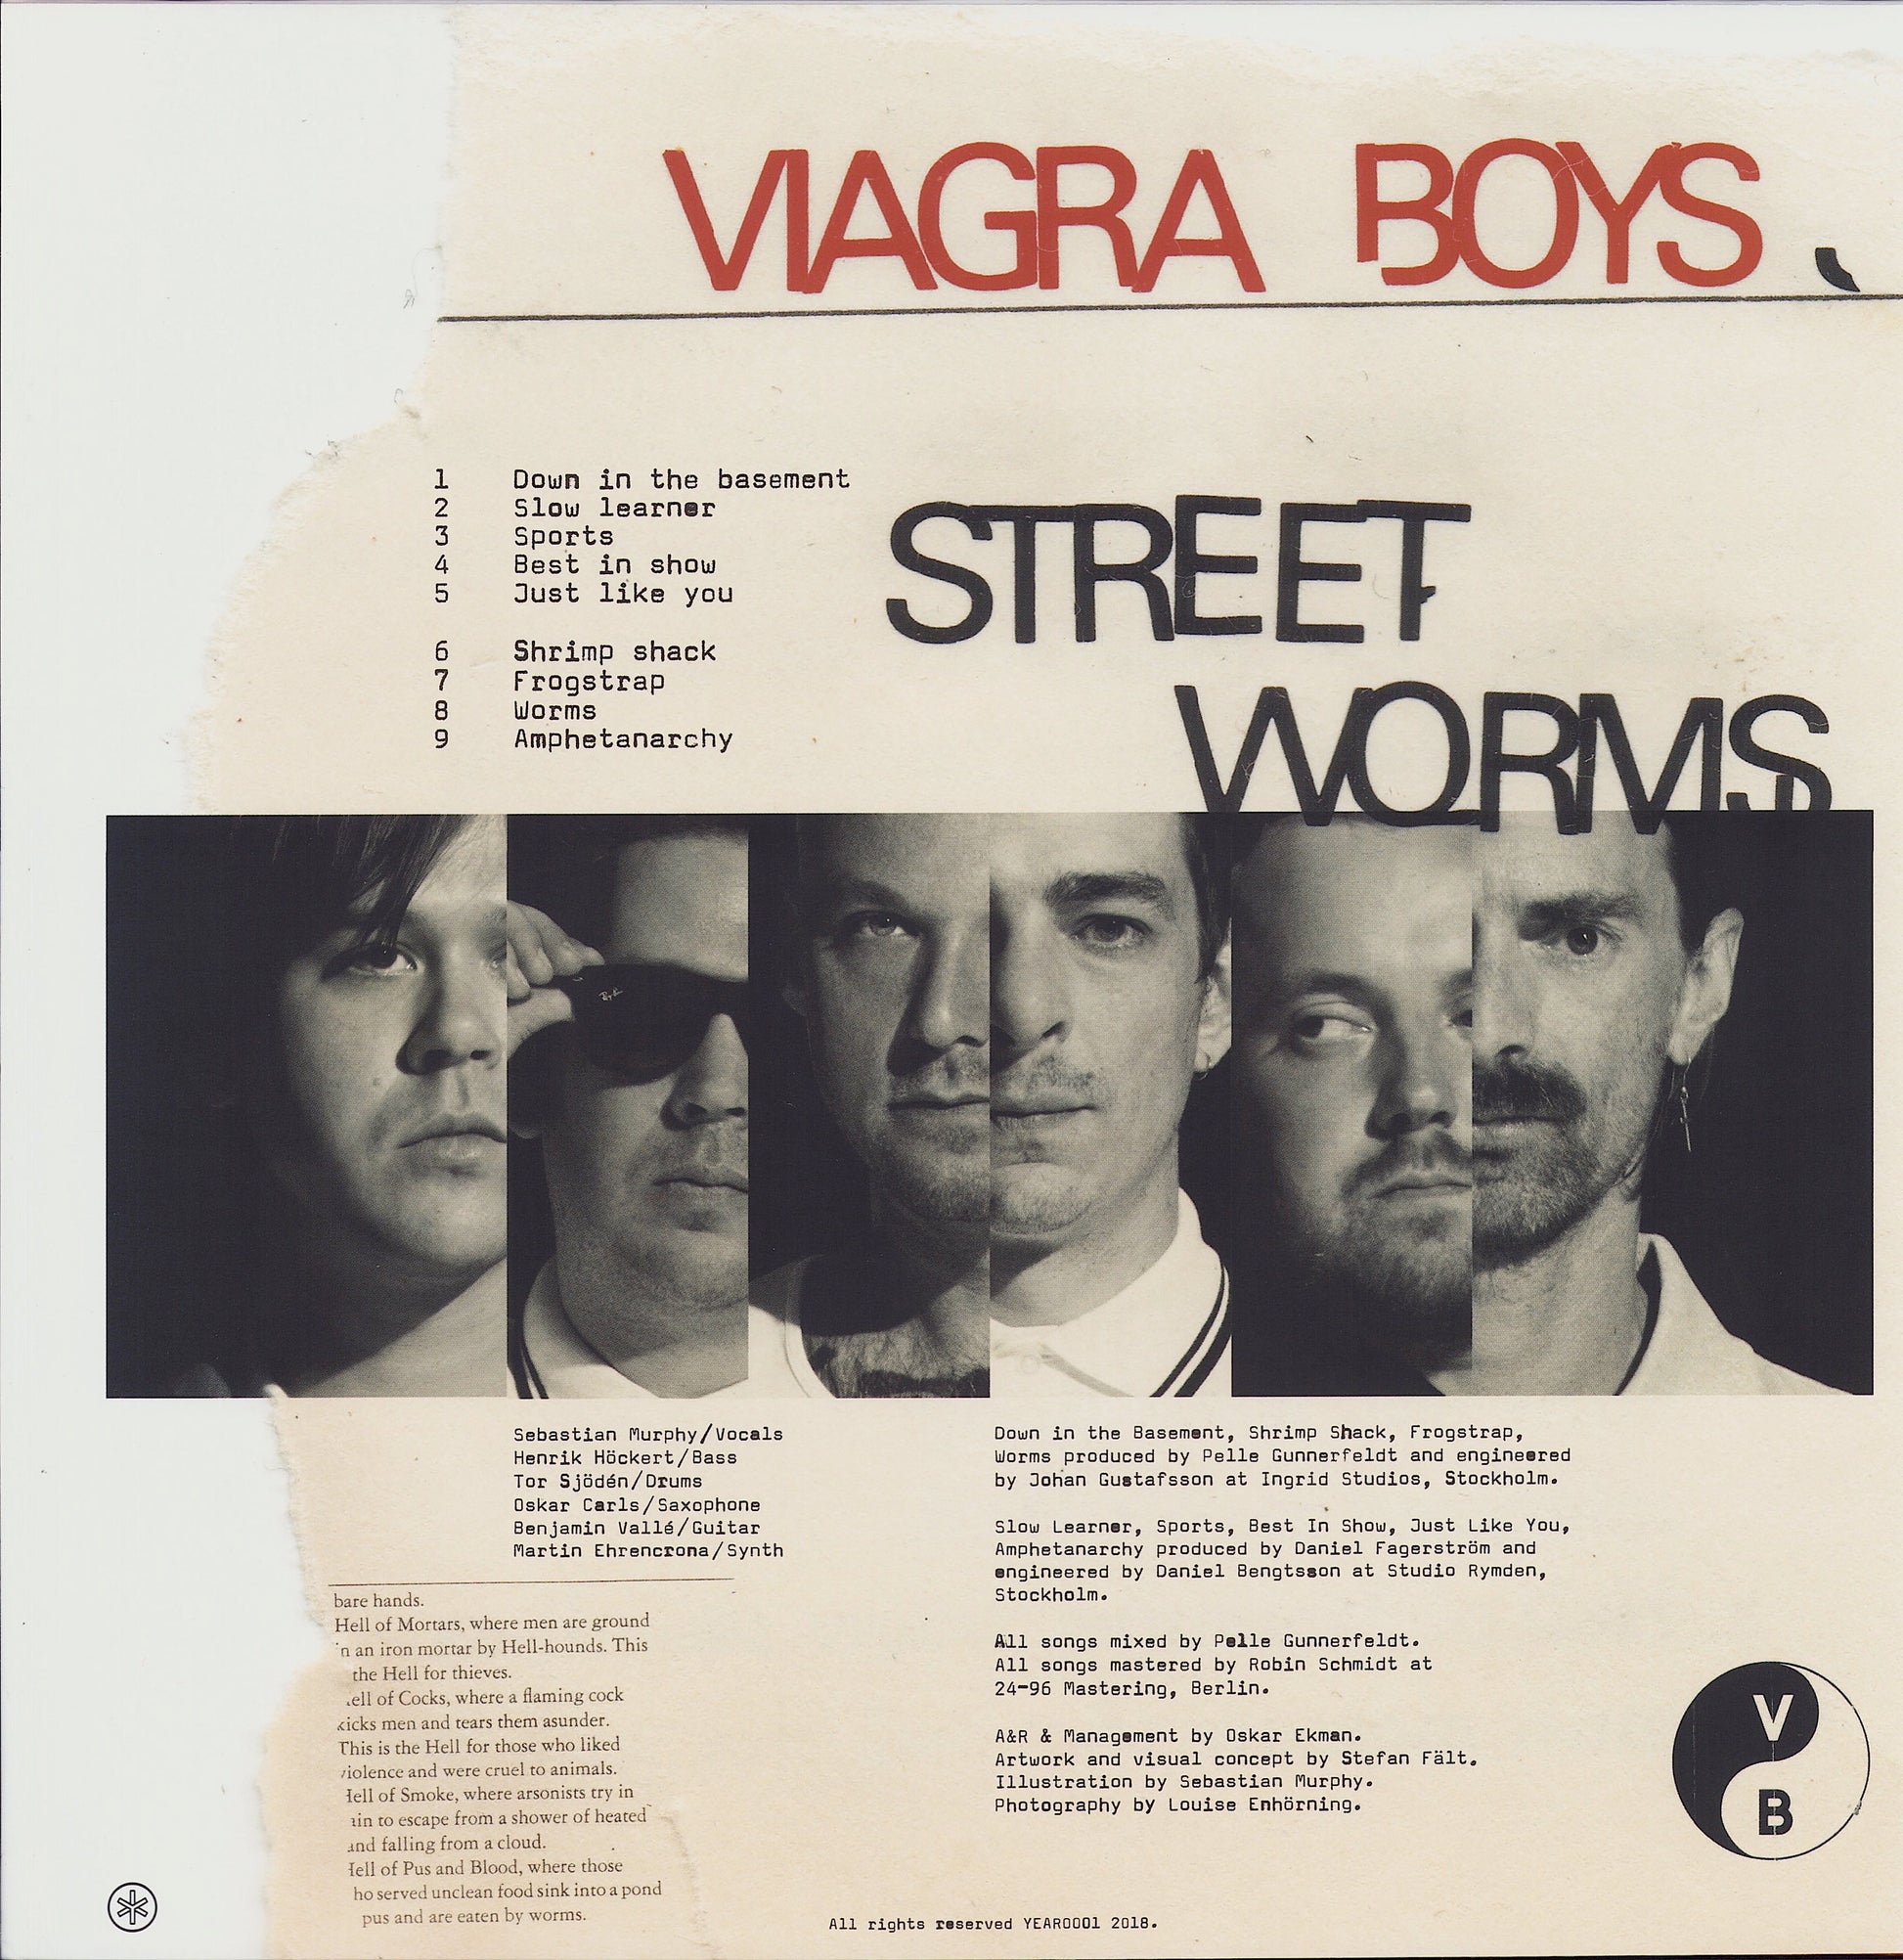 Viagra Boys - Street Worms Clear Vinyl LP Limited Edition